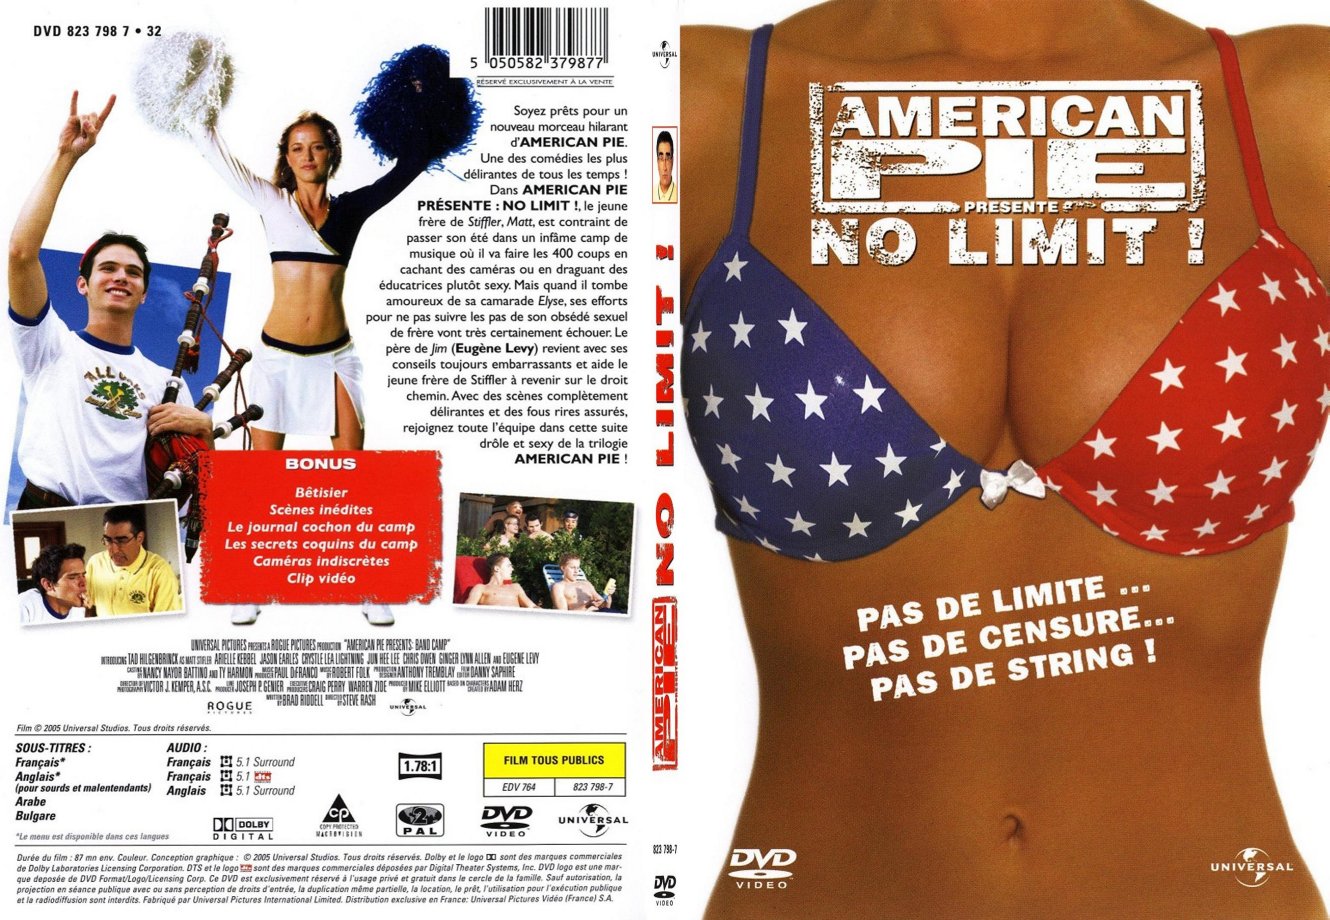 Jaquette DVD American pie no limit - SLIM